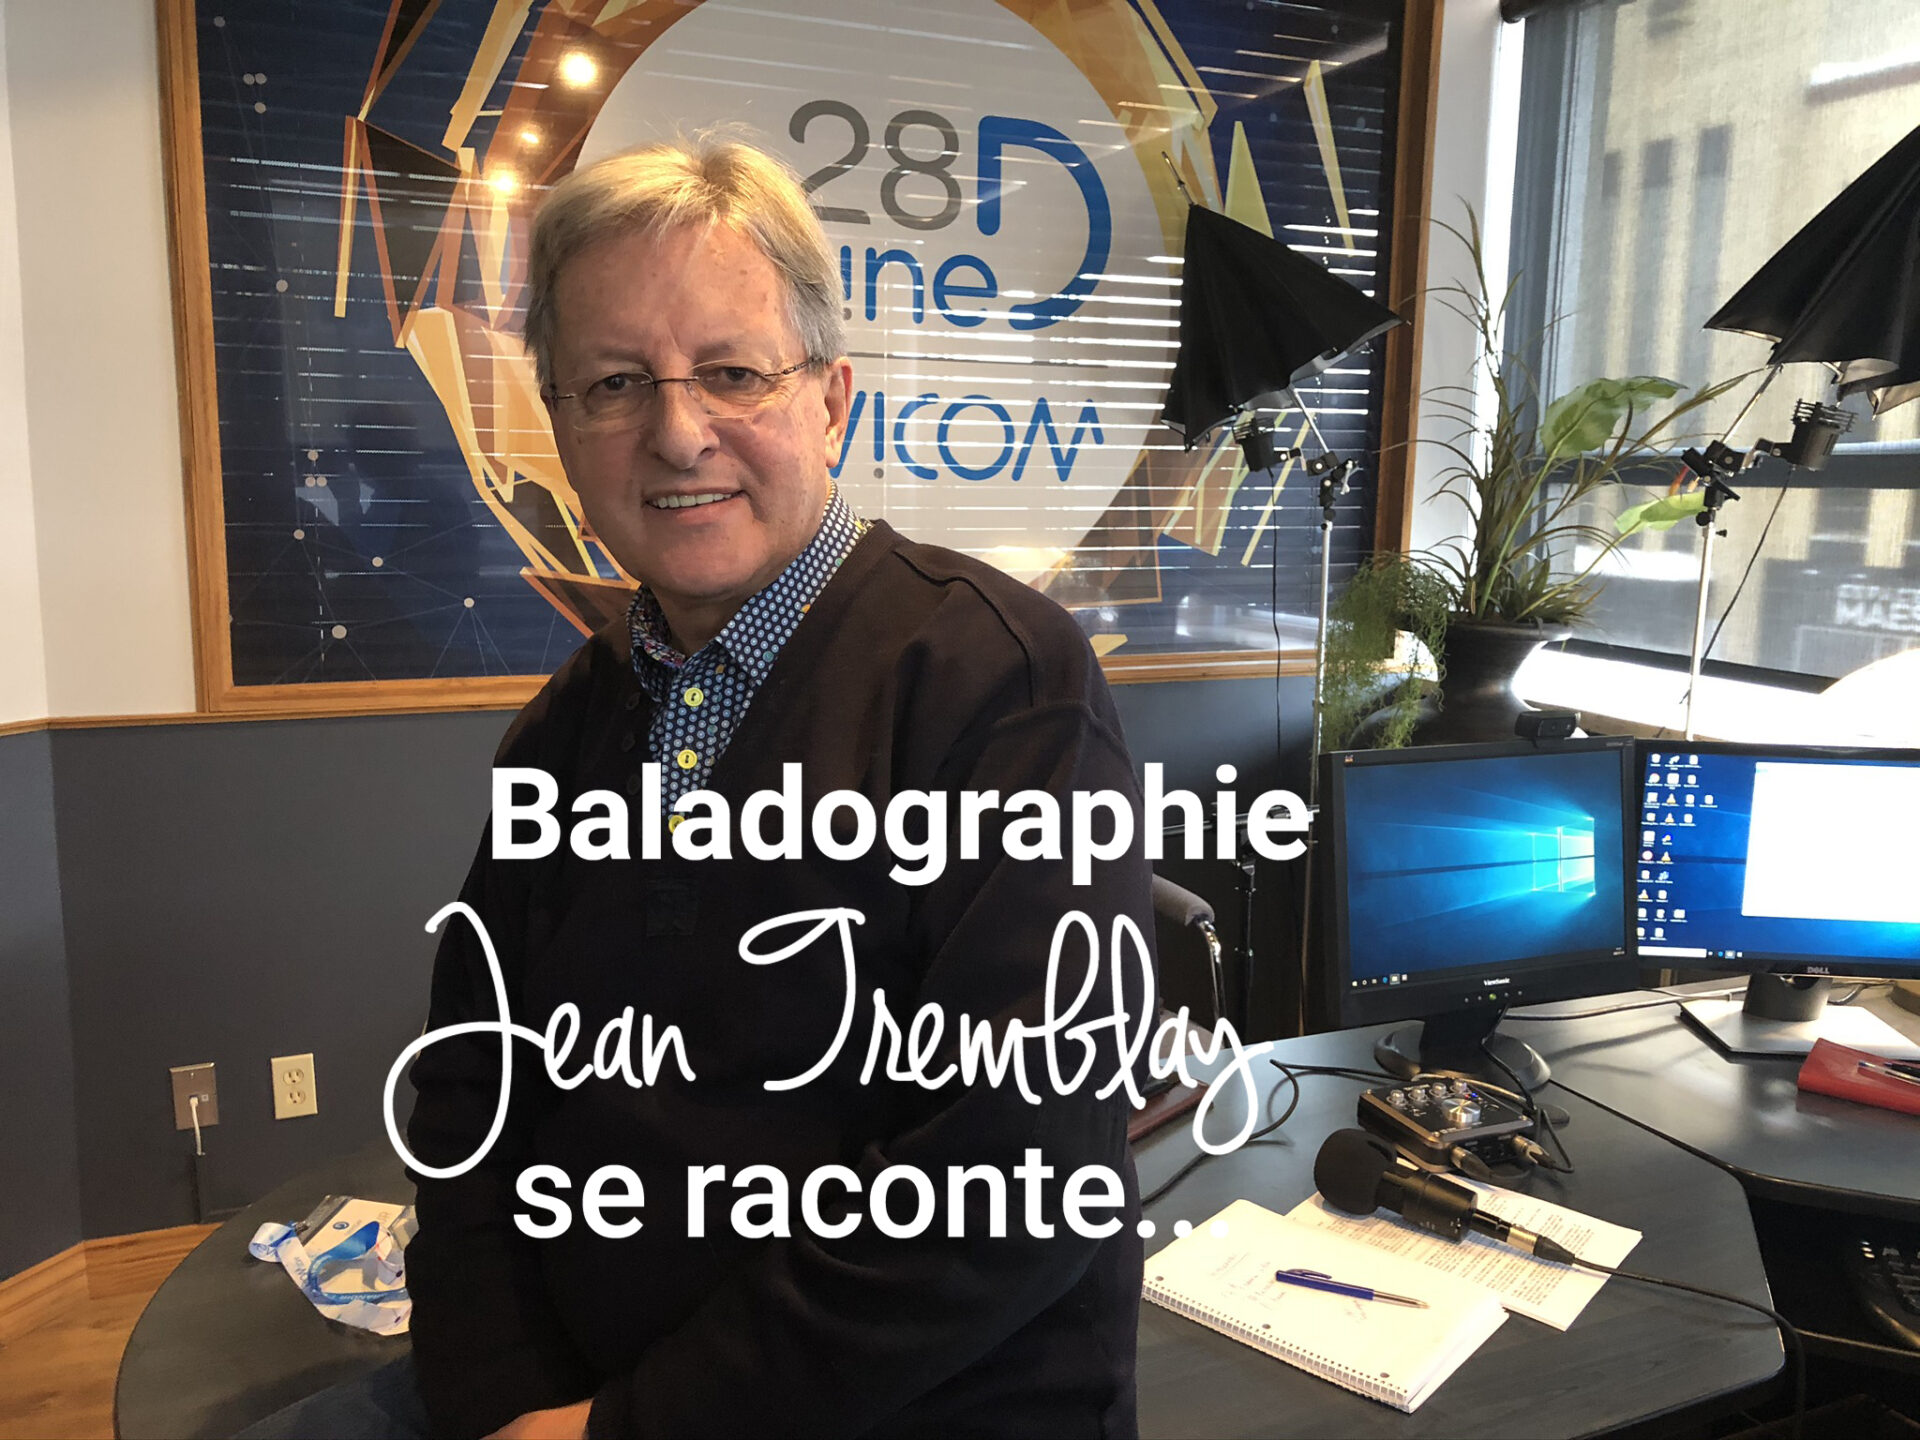 Mon Clavius lance la « Baladographie » avec Jean Tremblay